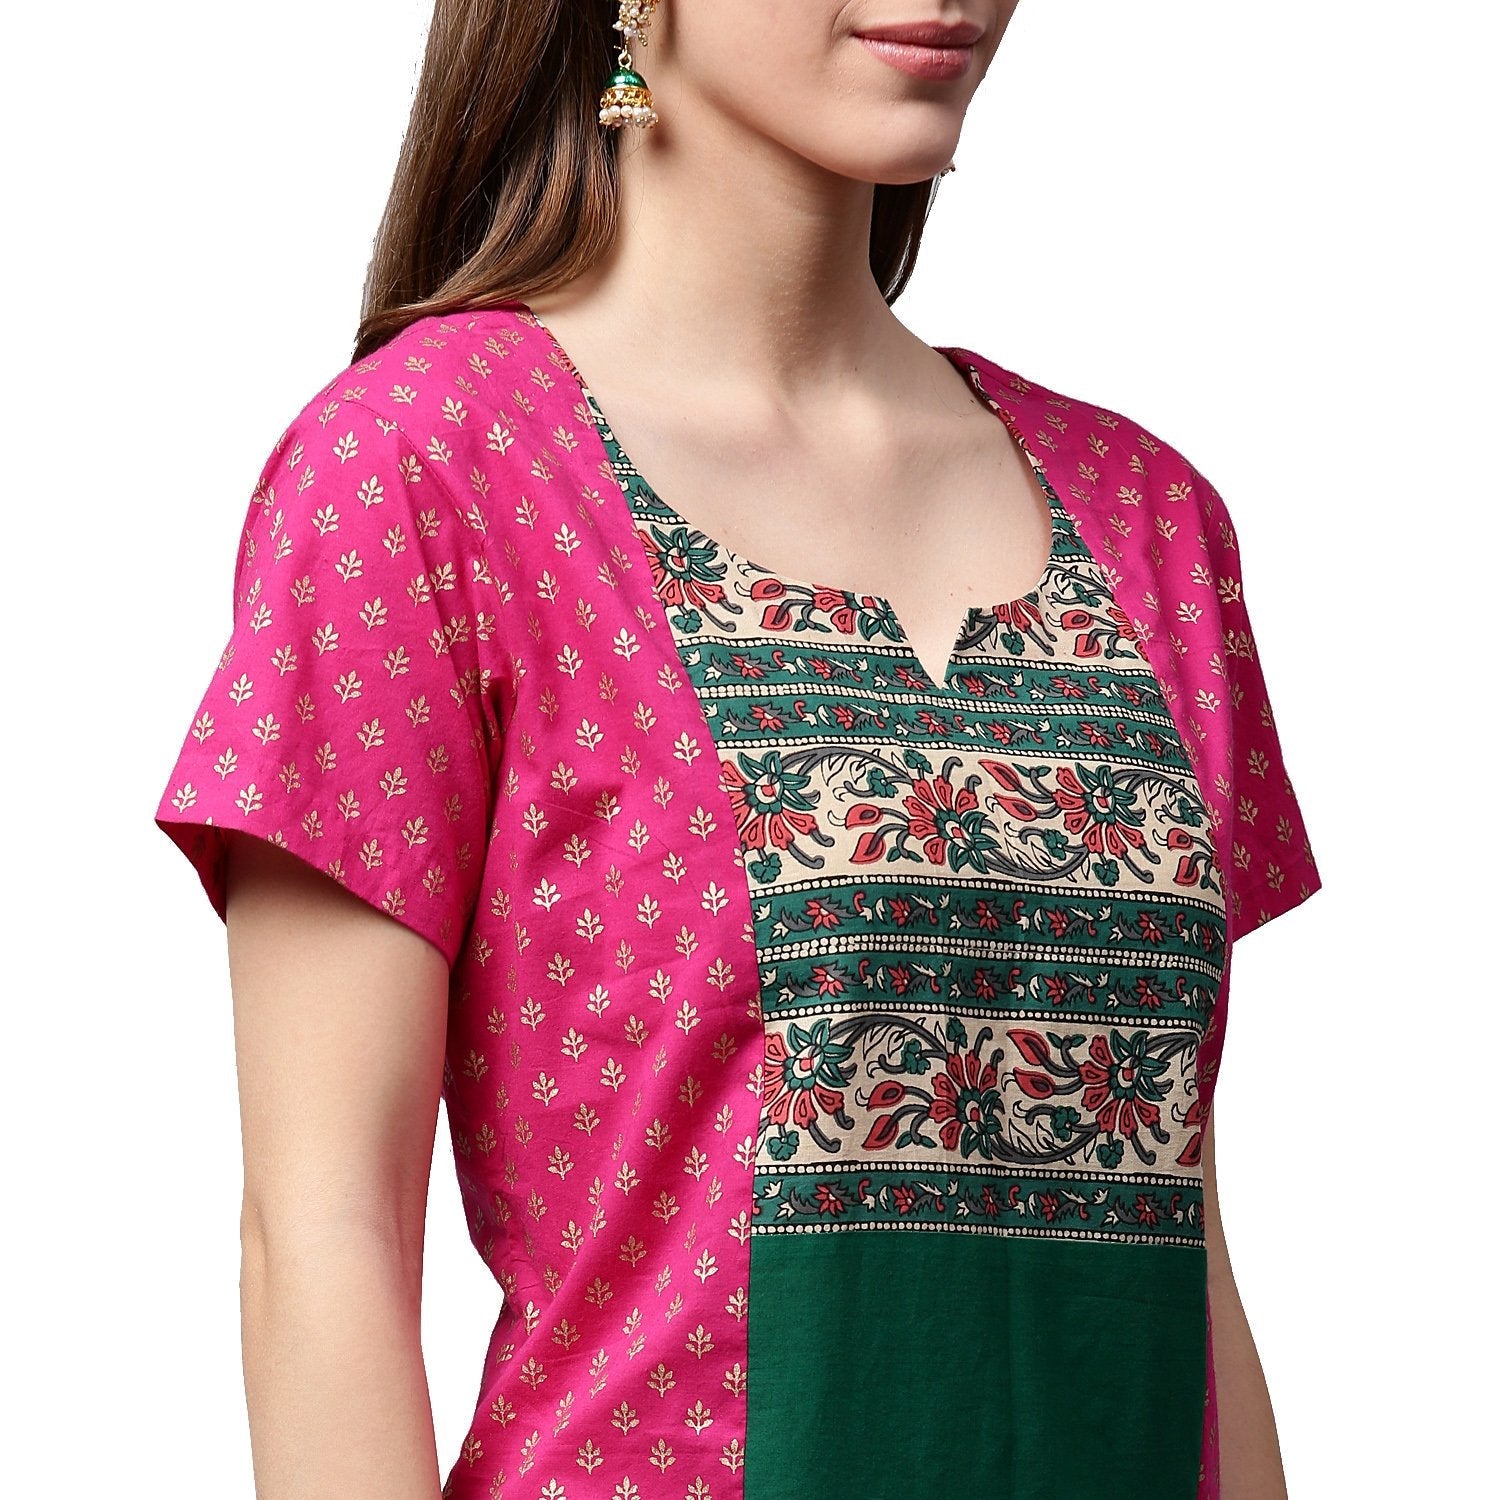 Women's Pink & Green Printed Short Sleeve Cotton A-Line Kurta - Nayo Clothing